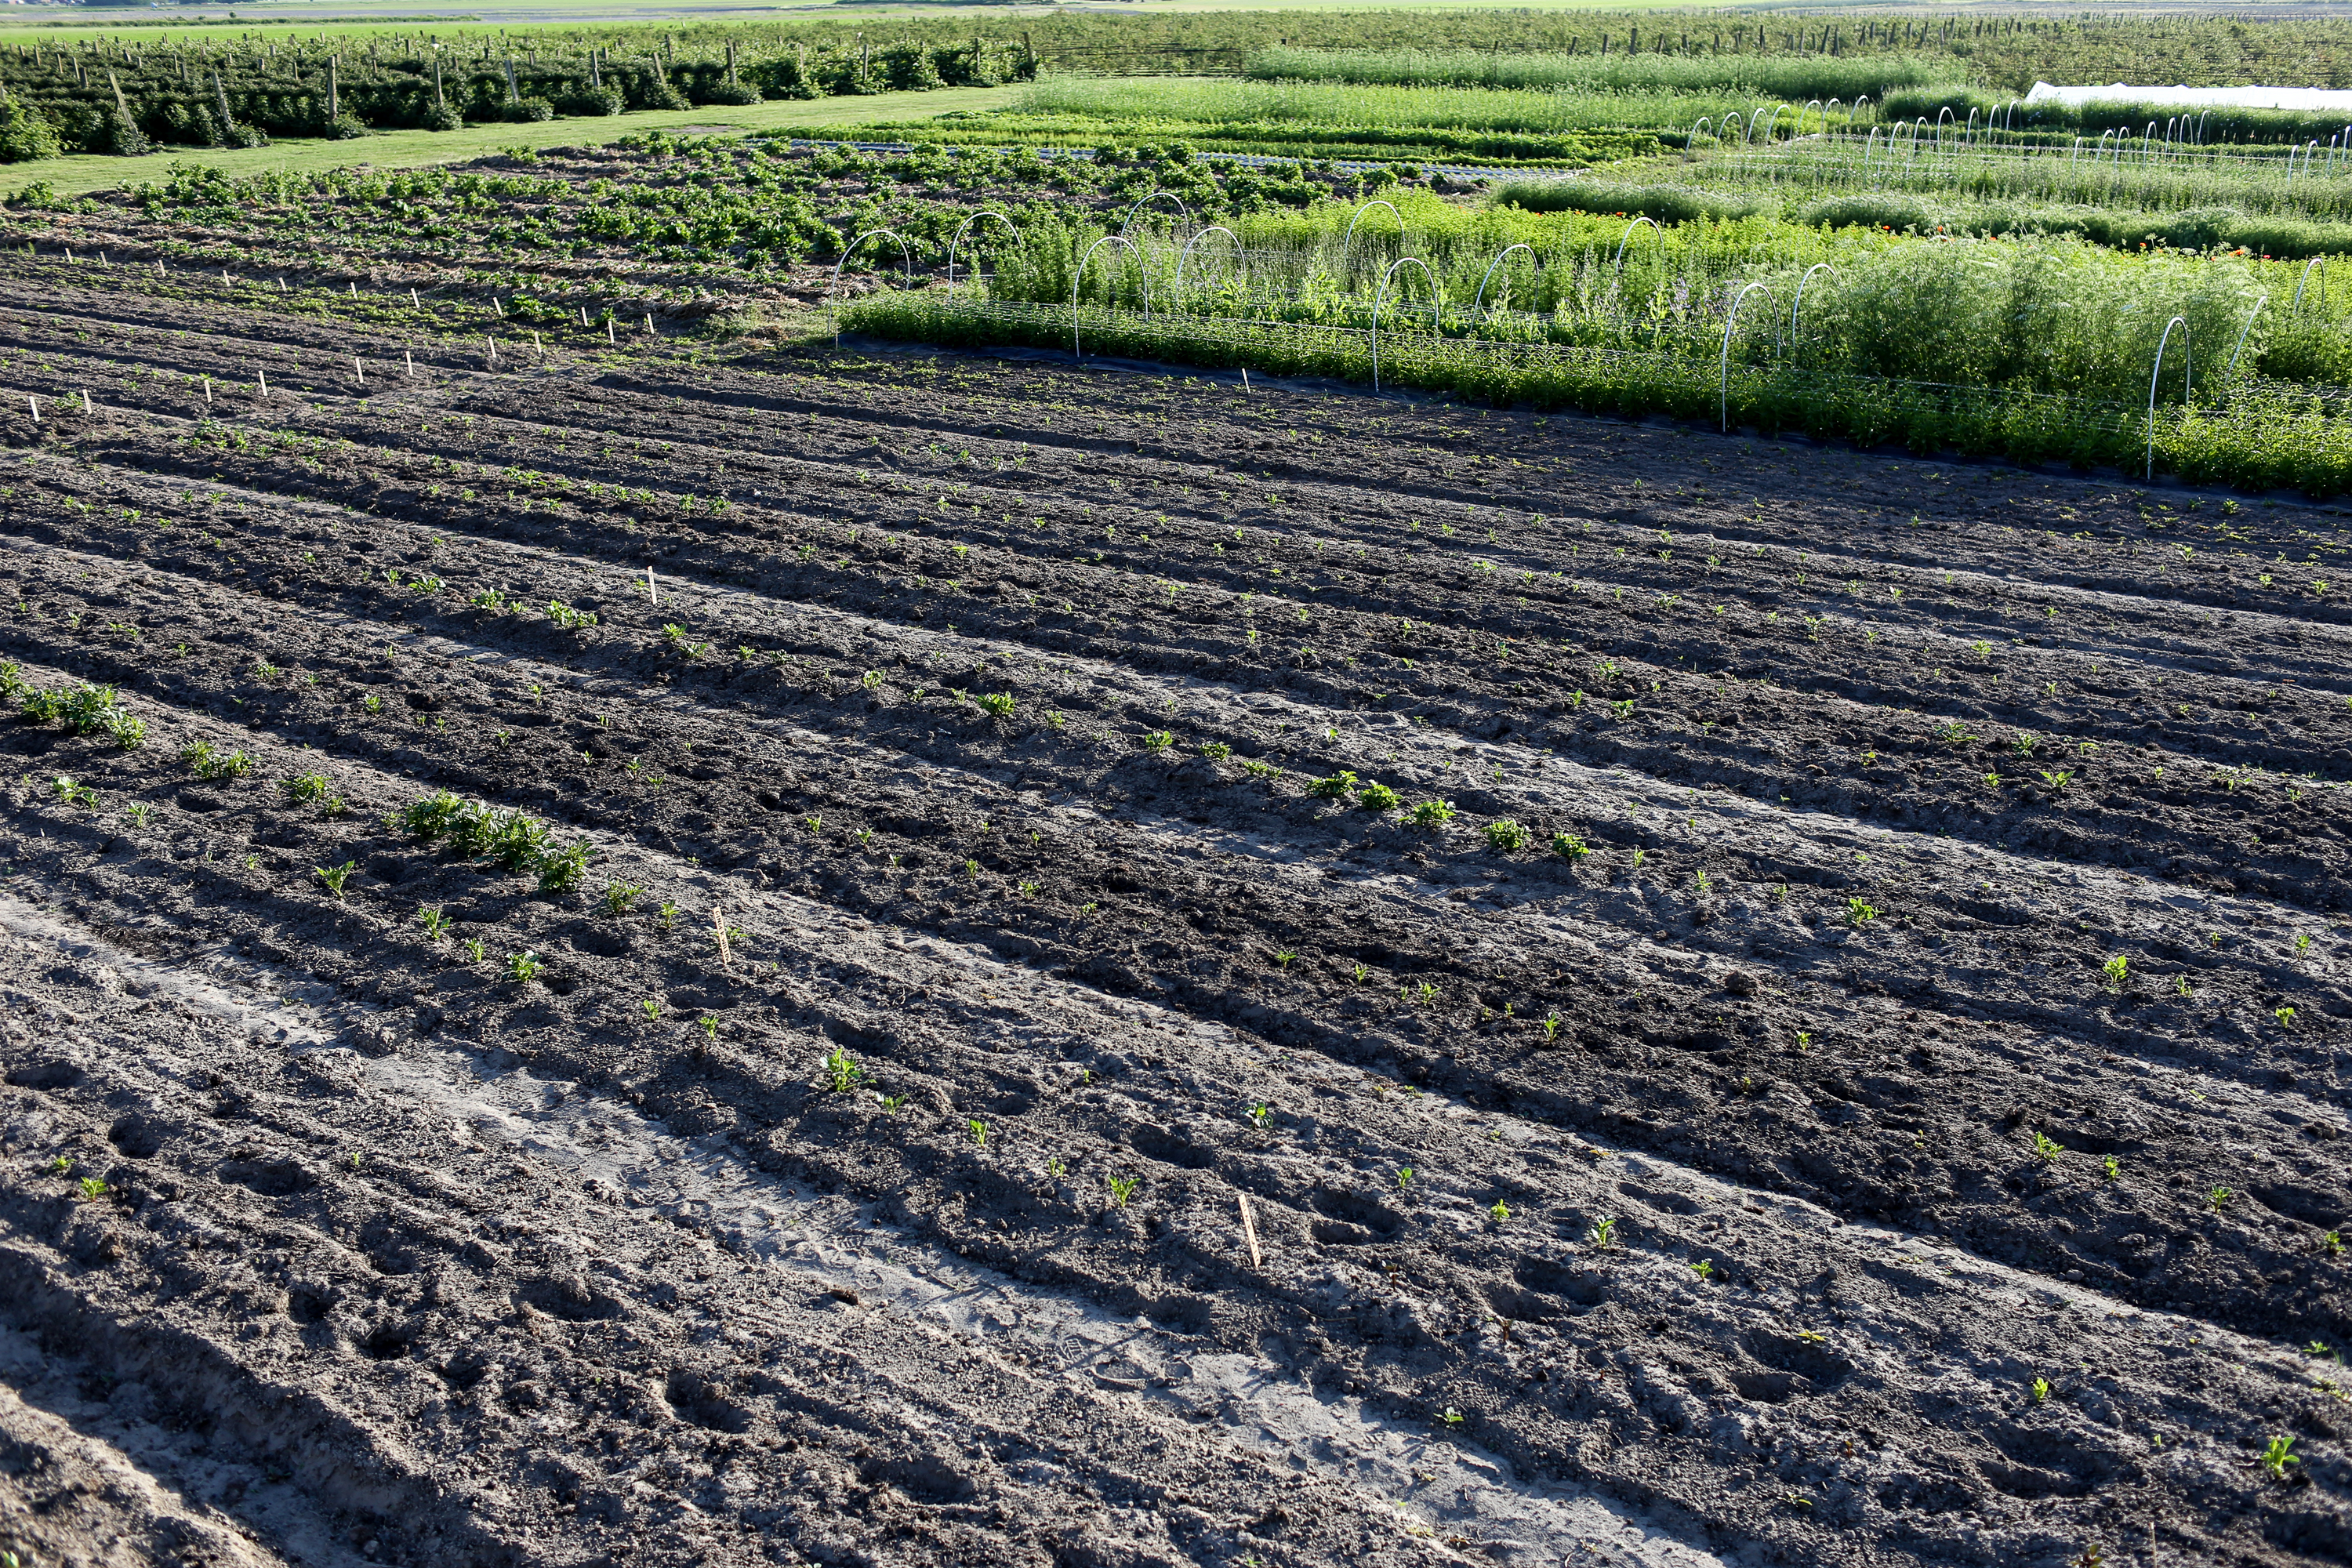 Bare soil fields at Floret